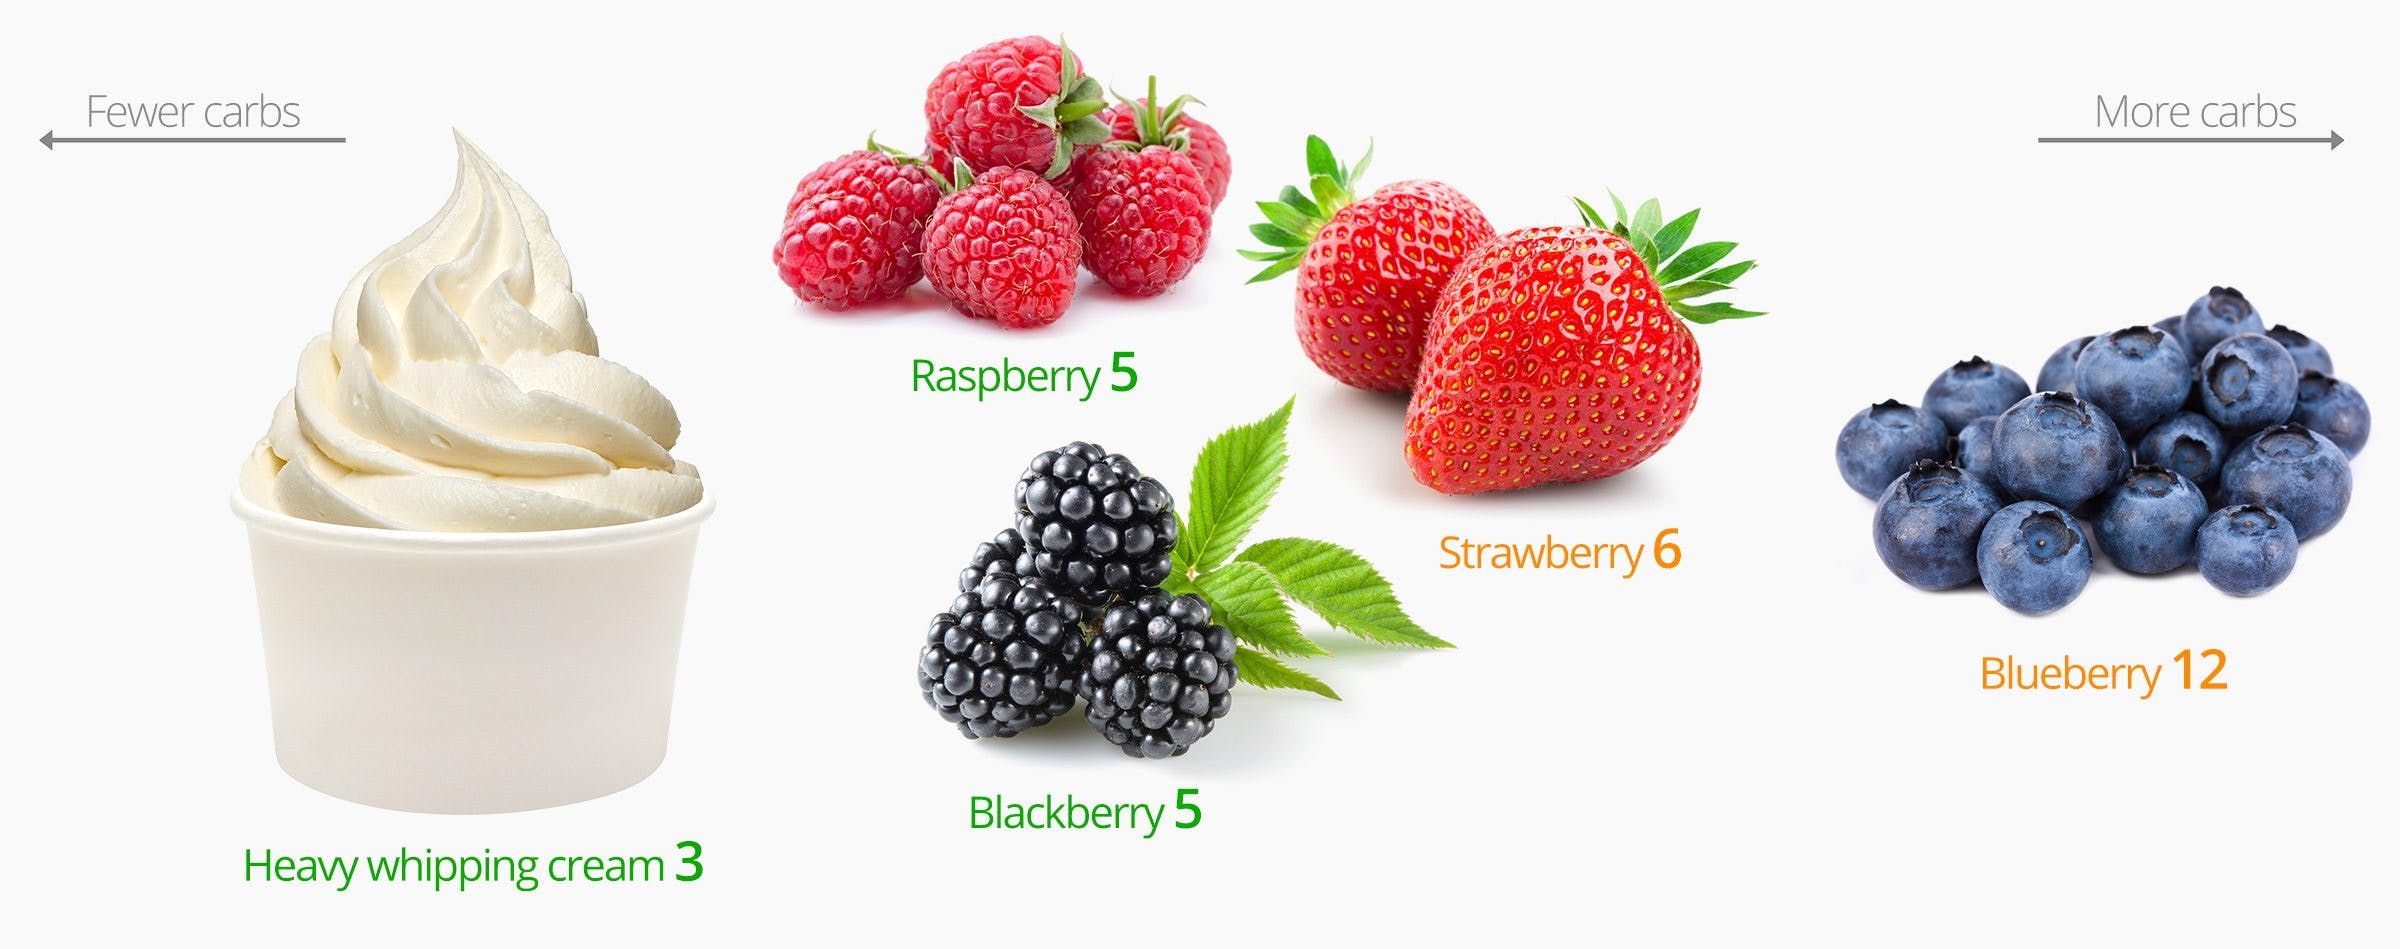 Low carb snacks: berries